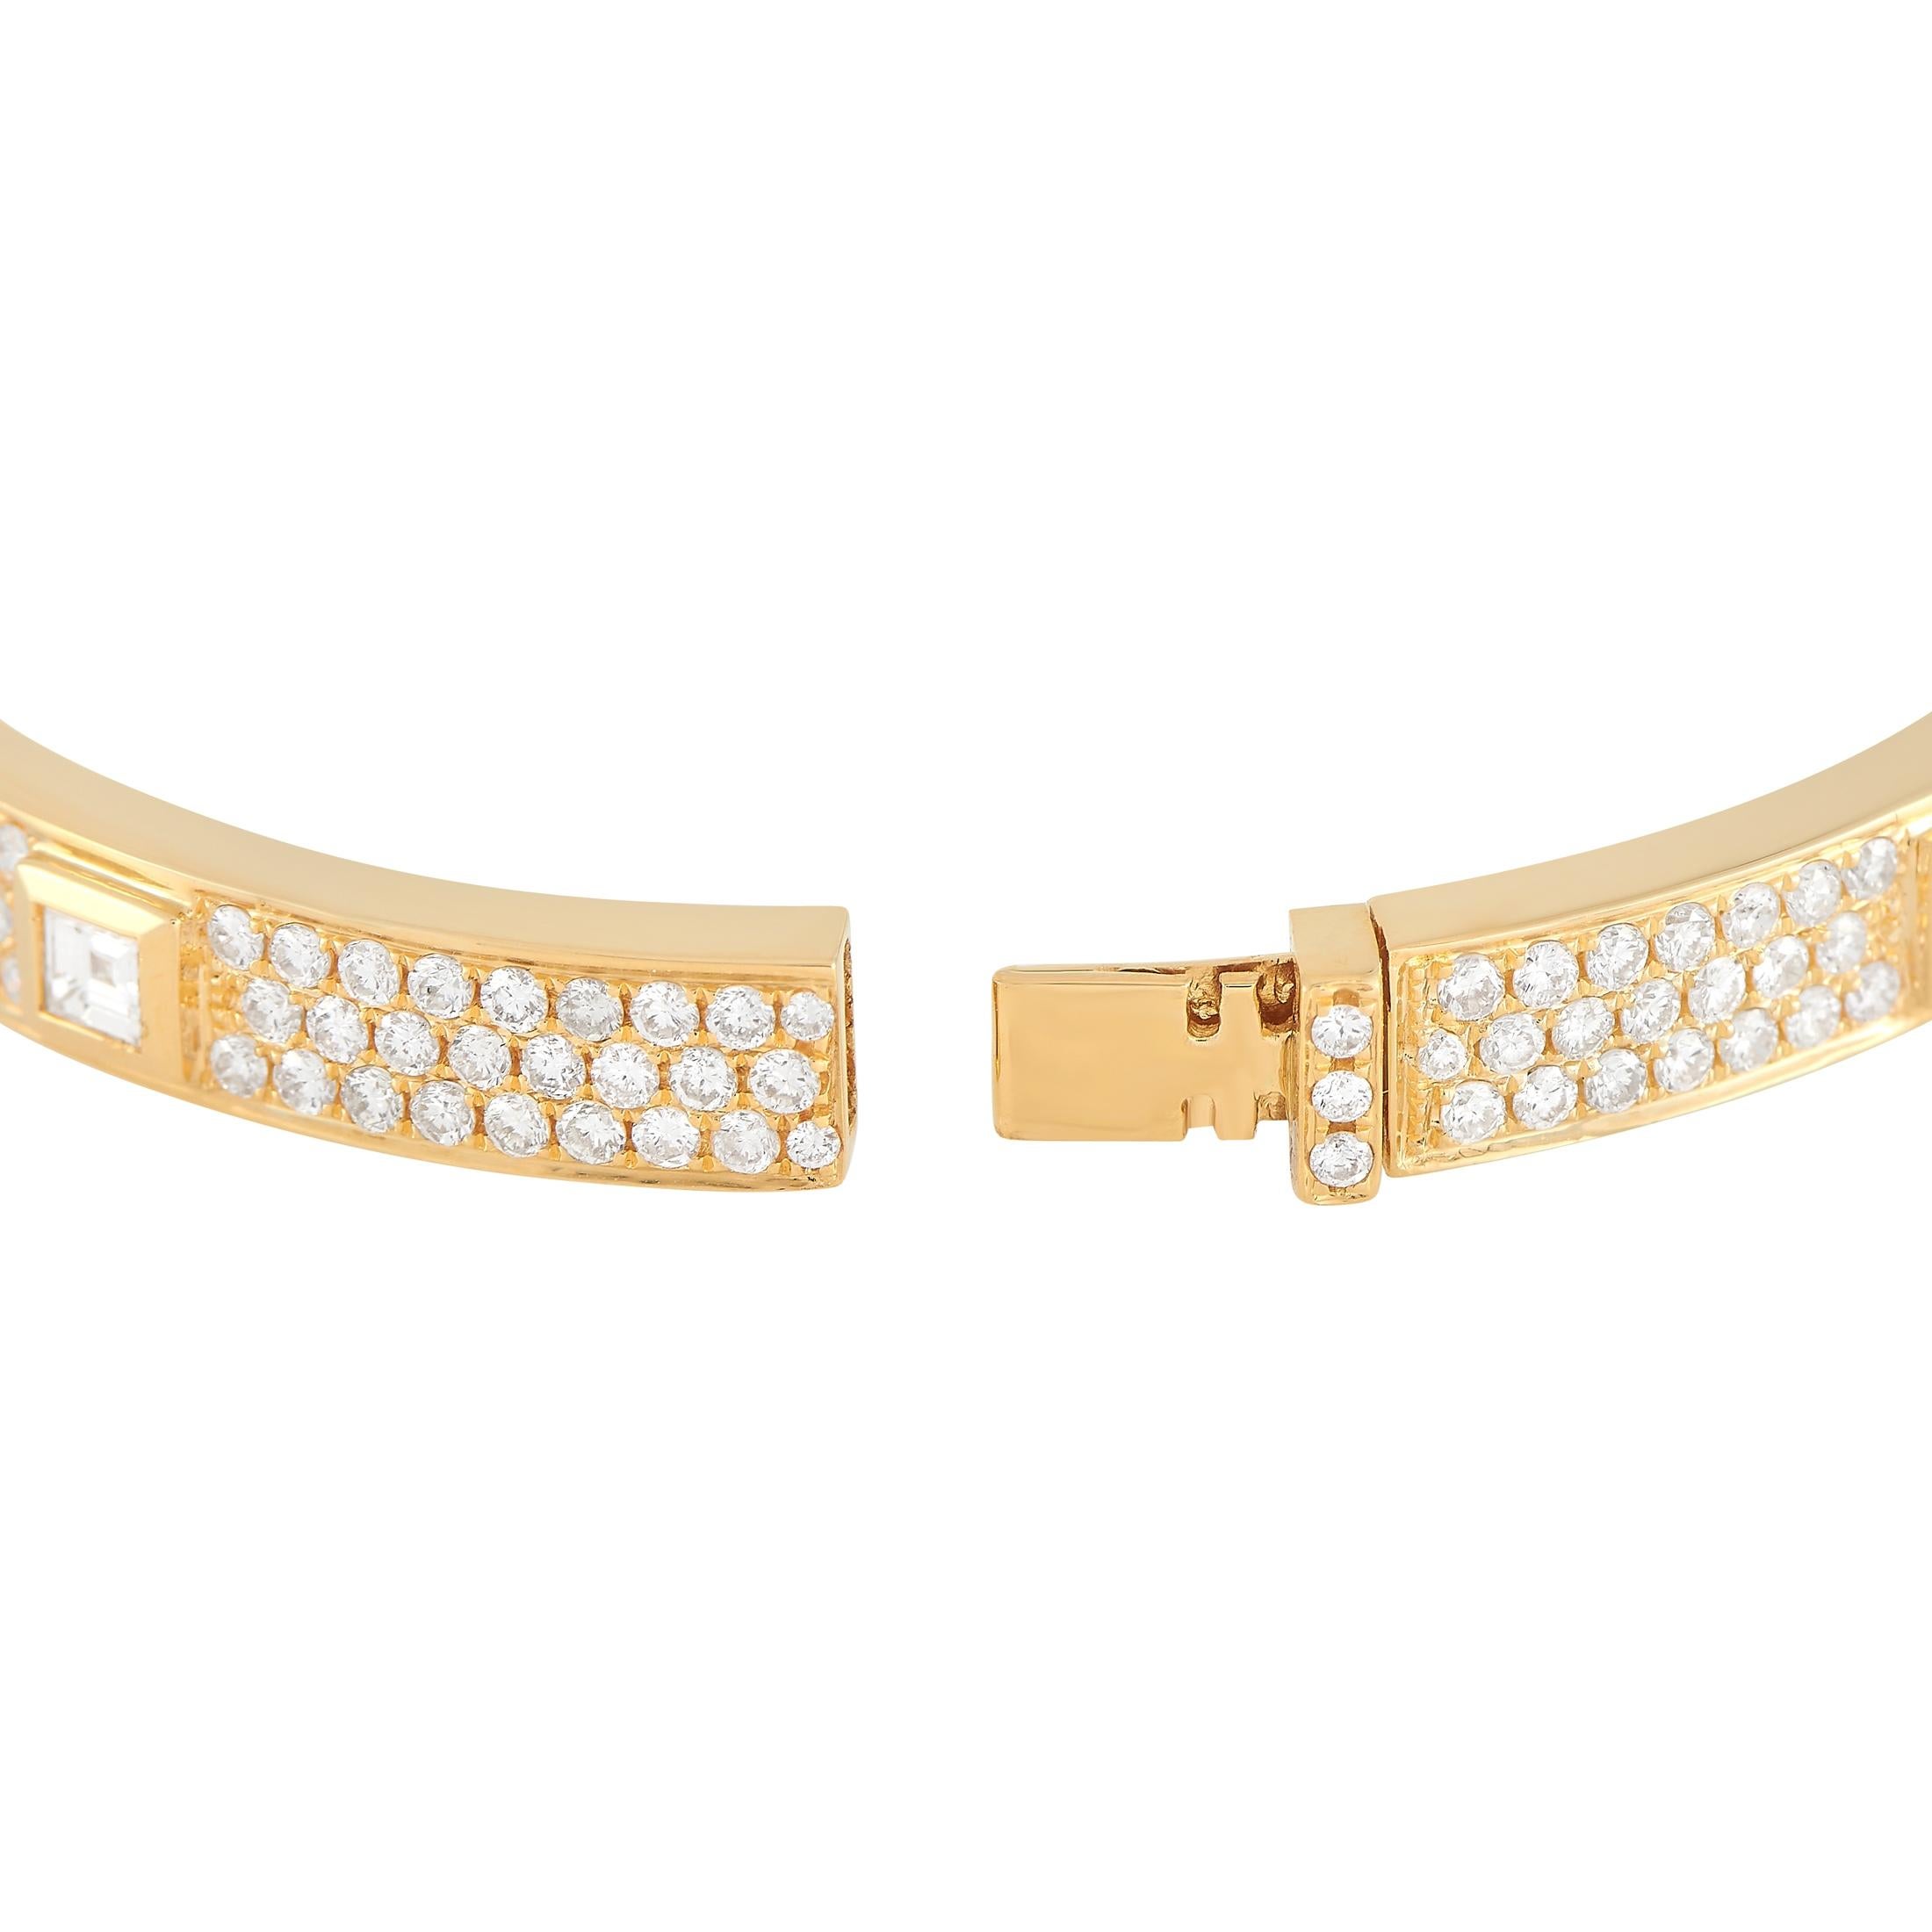 Round Cut LB Exclusive 18K Yellow Gold 4.65 Ct Diamond Bangle Bracelet